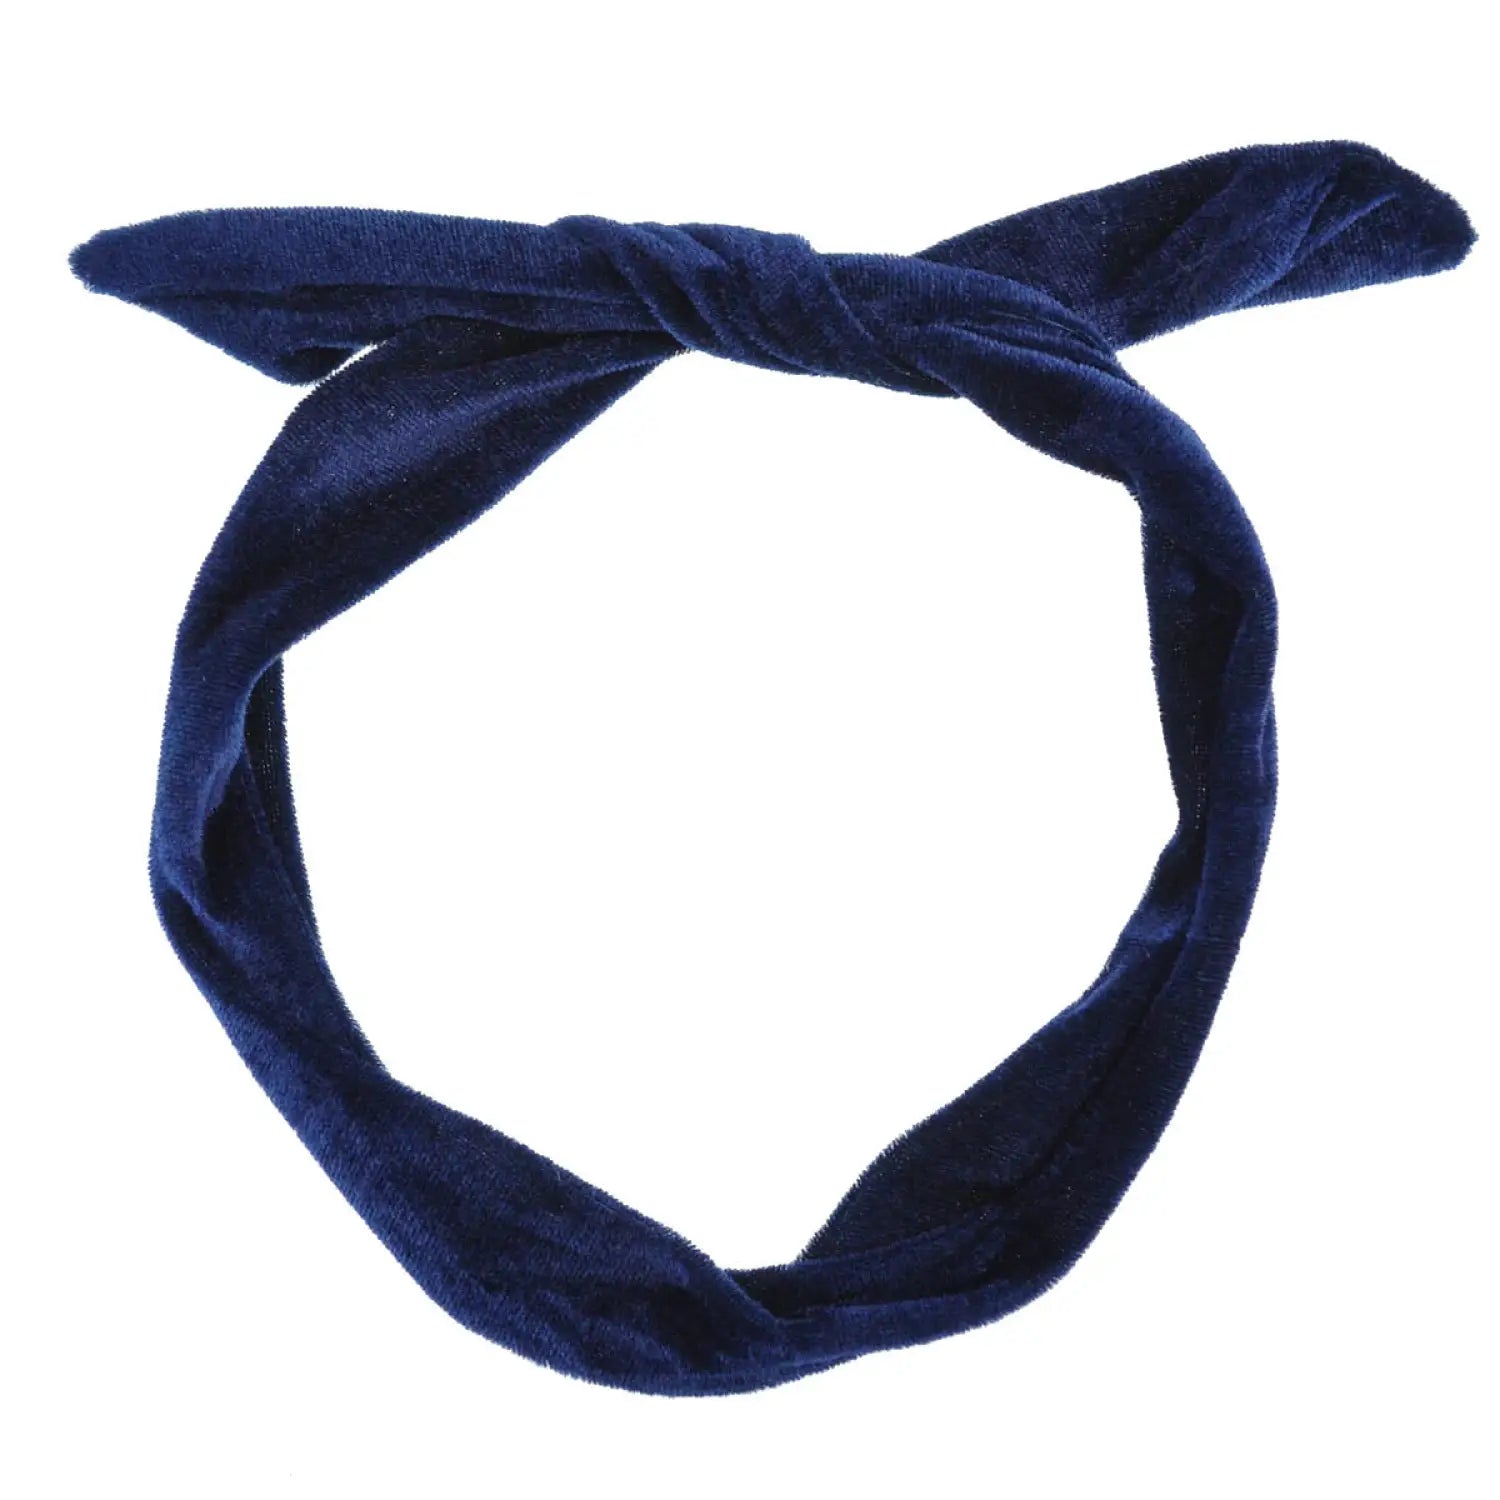 Navy blue velvet wired bunny ears headband with knot